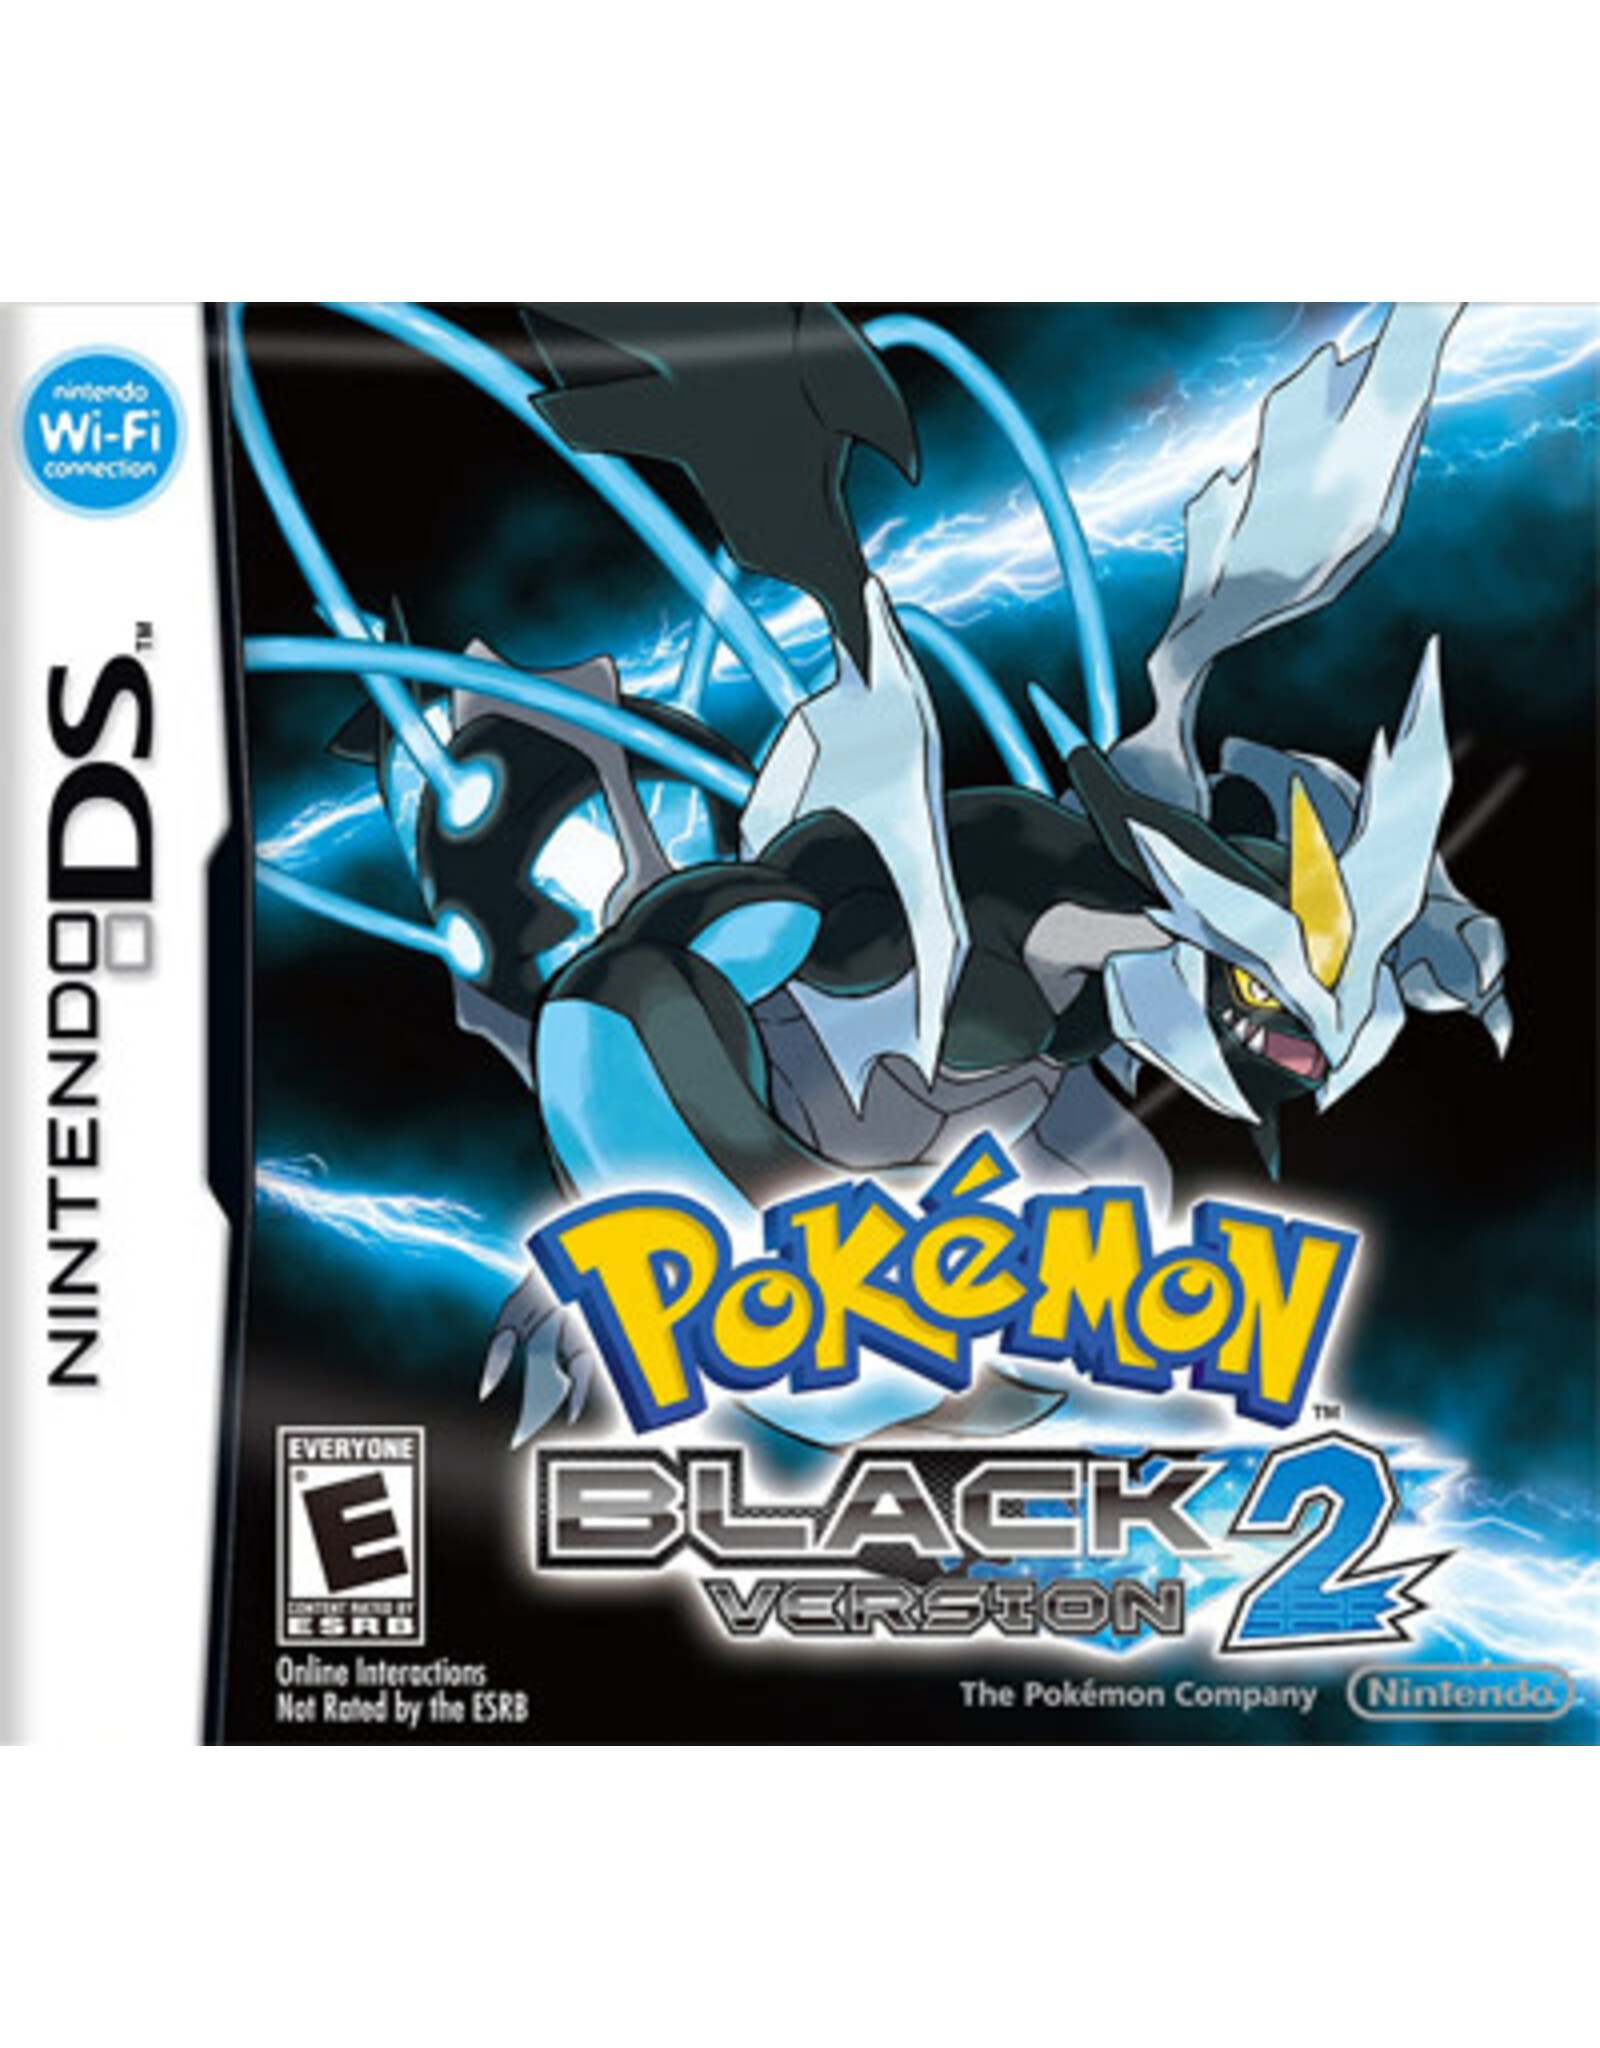 Nintendo DS Pokemon Black Version 2 (Used)